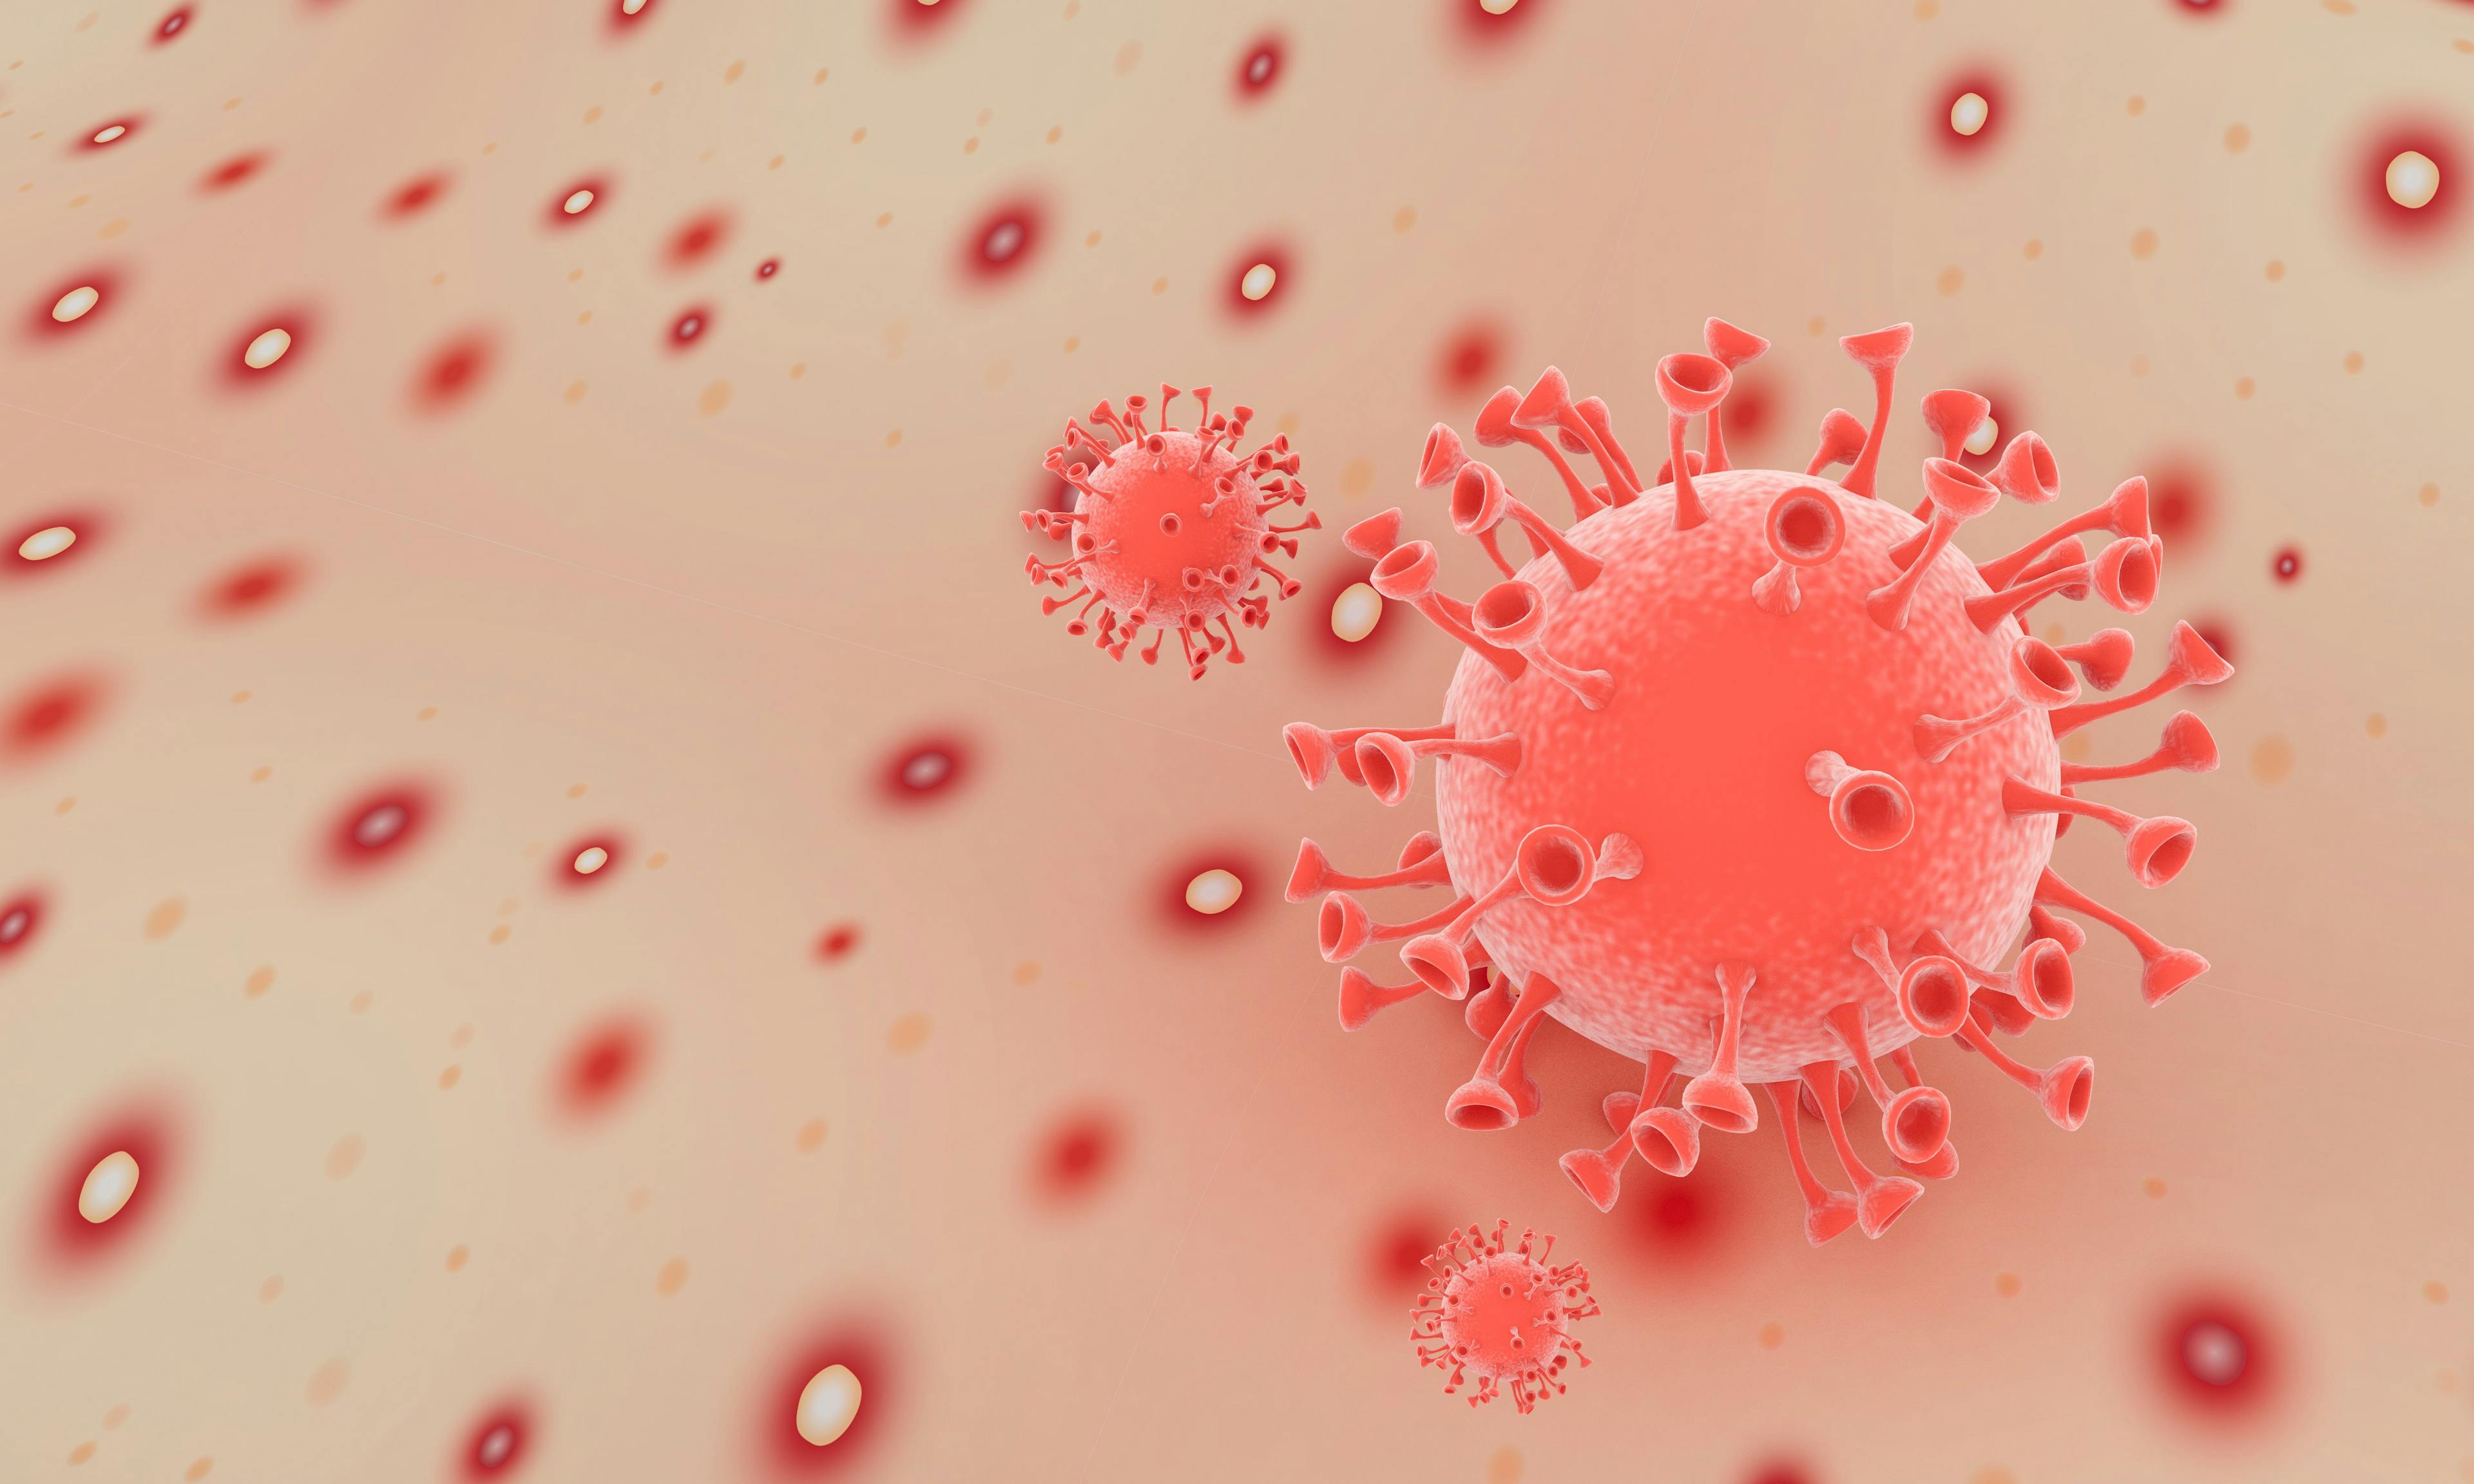 Study Finds Similar Treatment Outcomes for Monkeypox Regardless of HIV Status